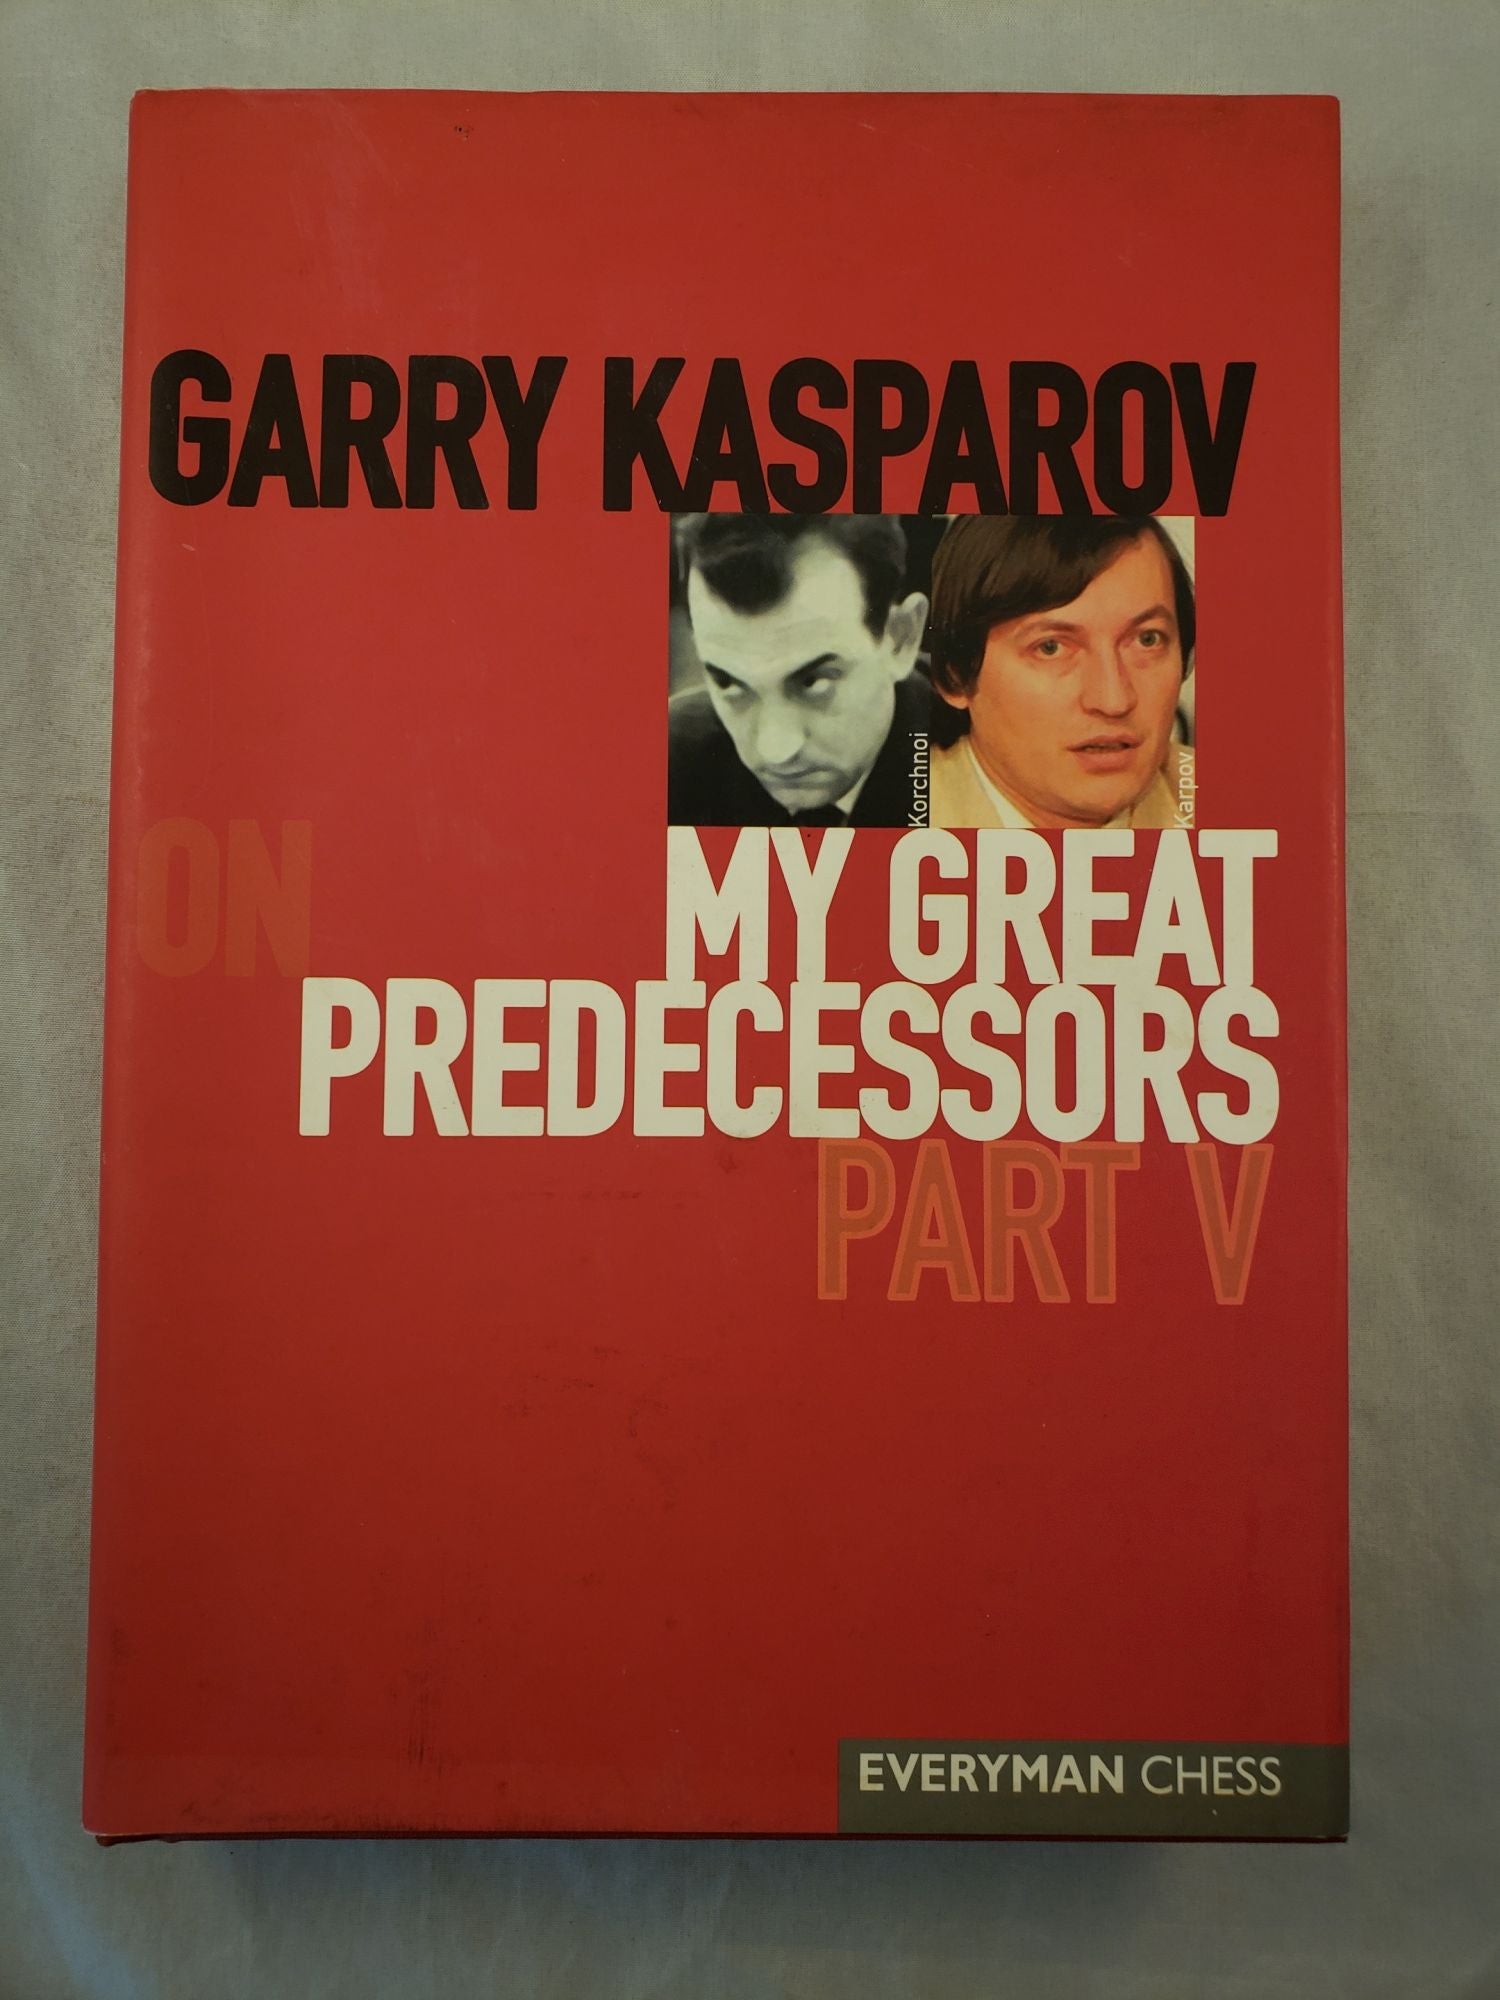 Garry Kasparov on Garry Kasparov - Part III